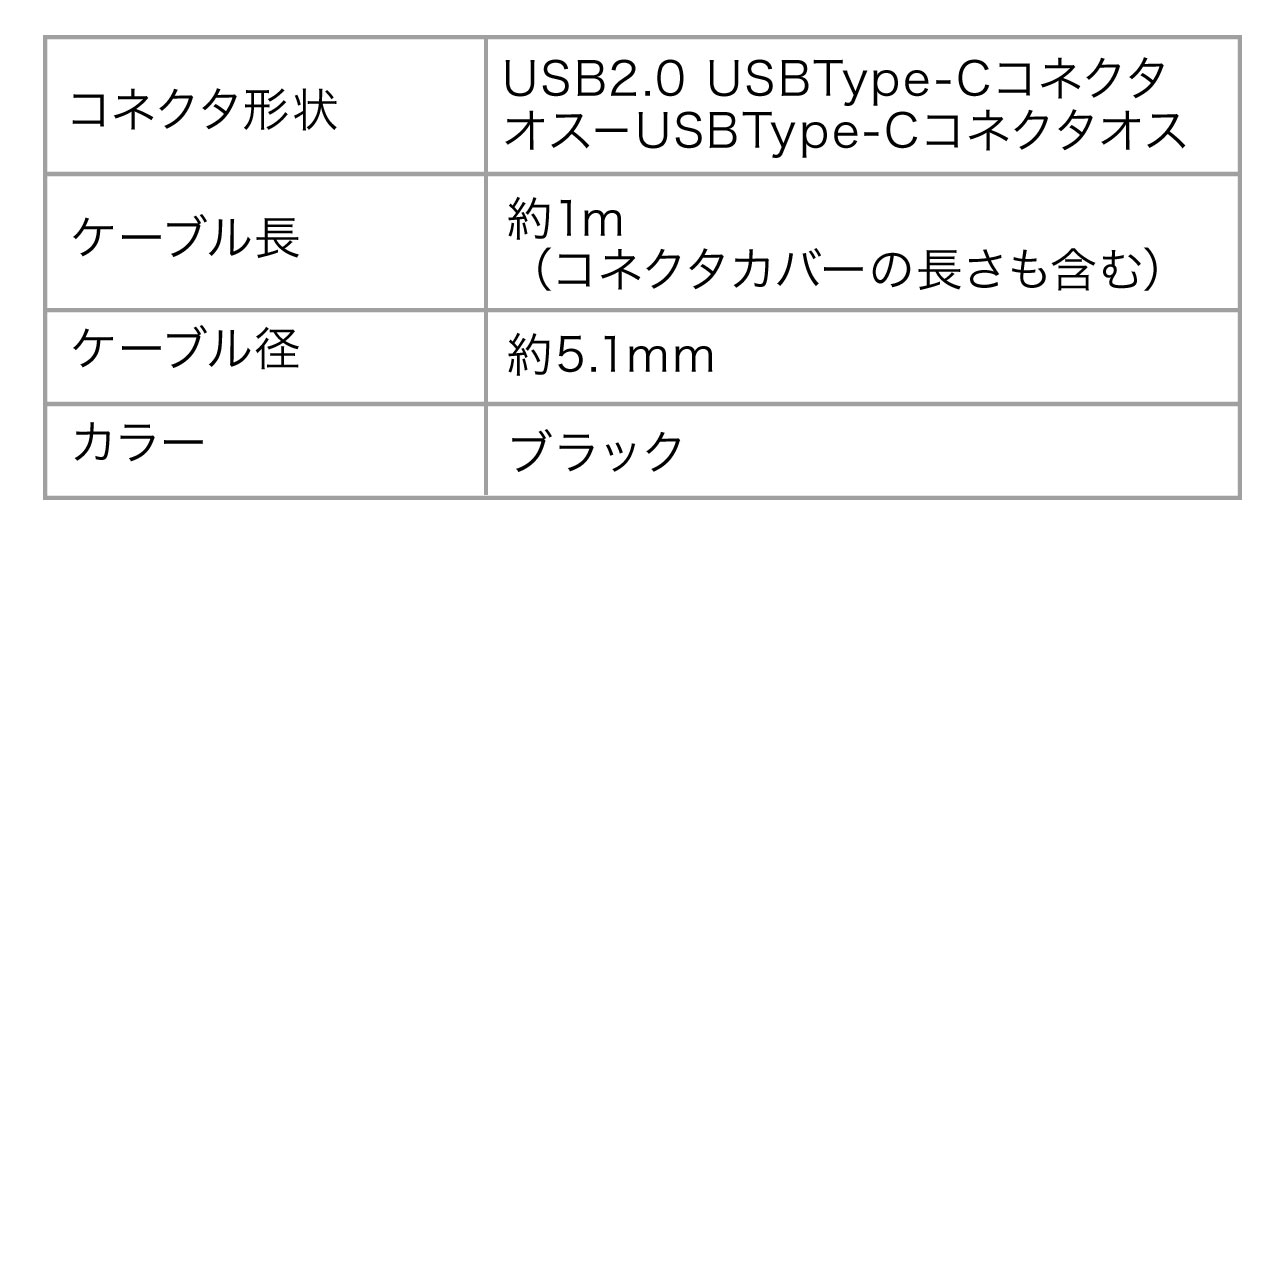 USB Type-CP[uiUSB2.0EUSB PDΉEType-CIX/Type-CIXEUSB-IFF؍ς݁E1mEubNj 500-USB052-1